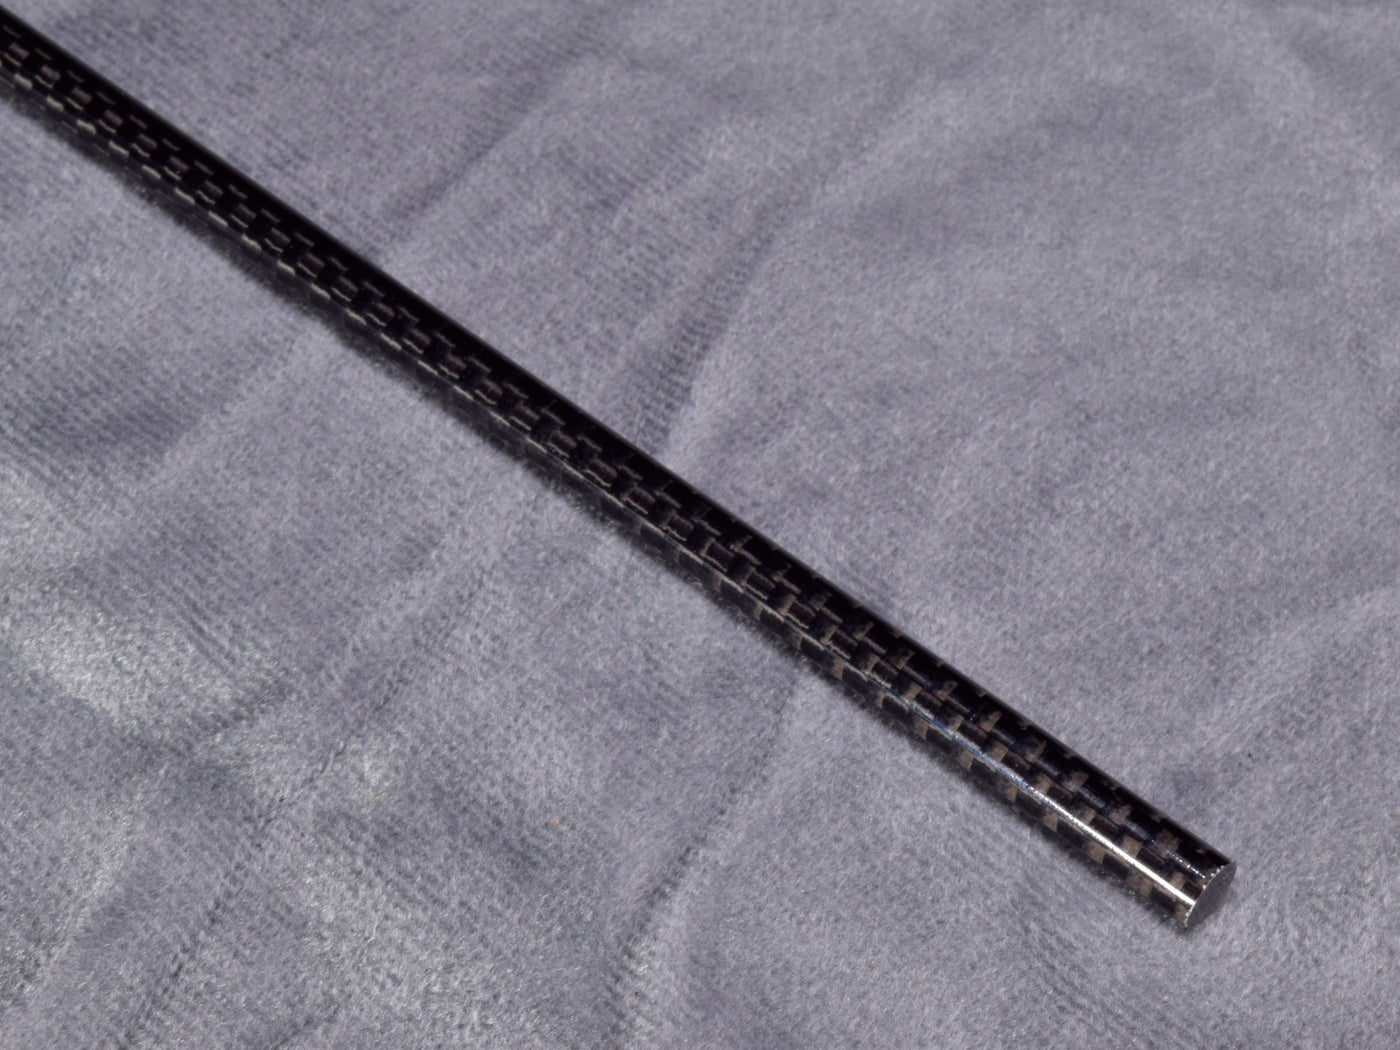 6mm x 500mm 3K Wrapped Carbon Fiber Rod